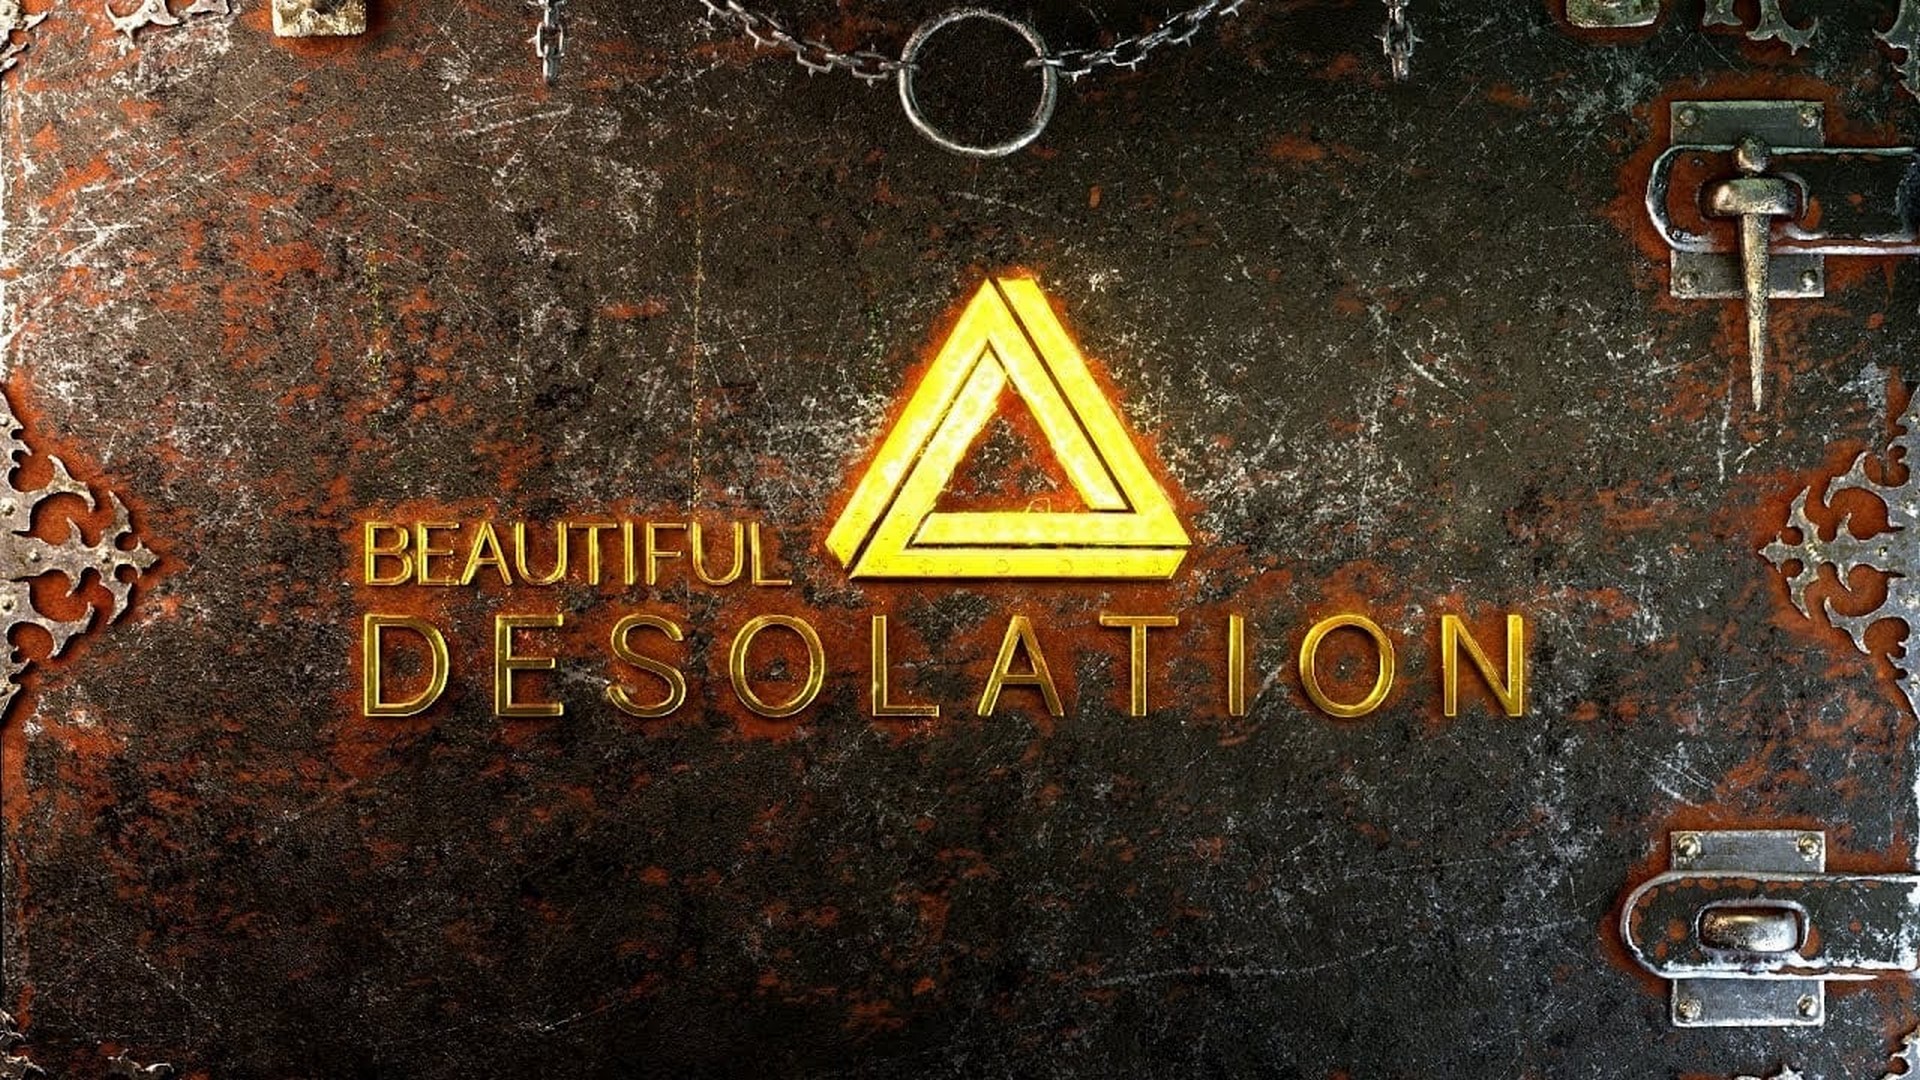 Take a Twisted Trip – Beautiful Desolation Console Playthrough Videos